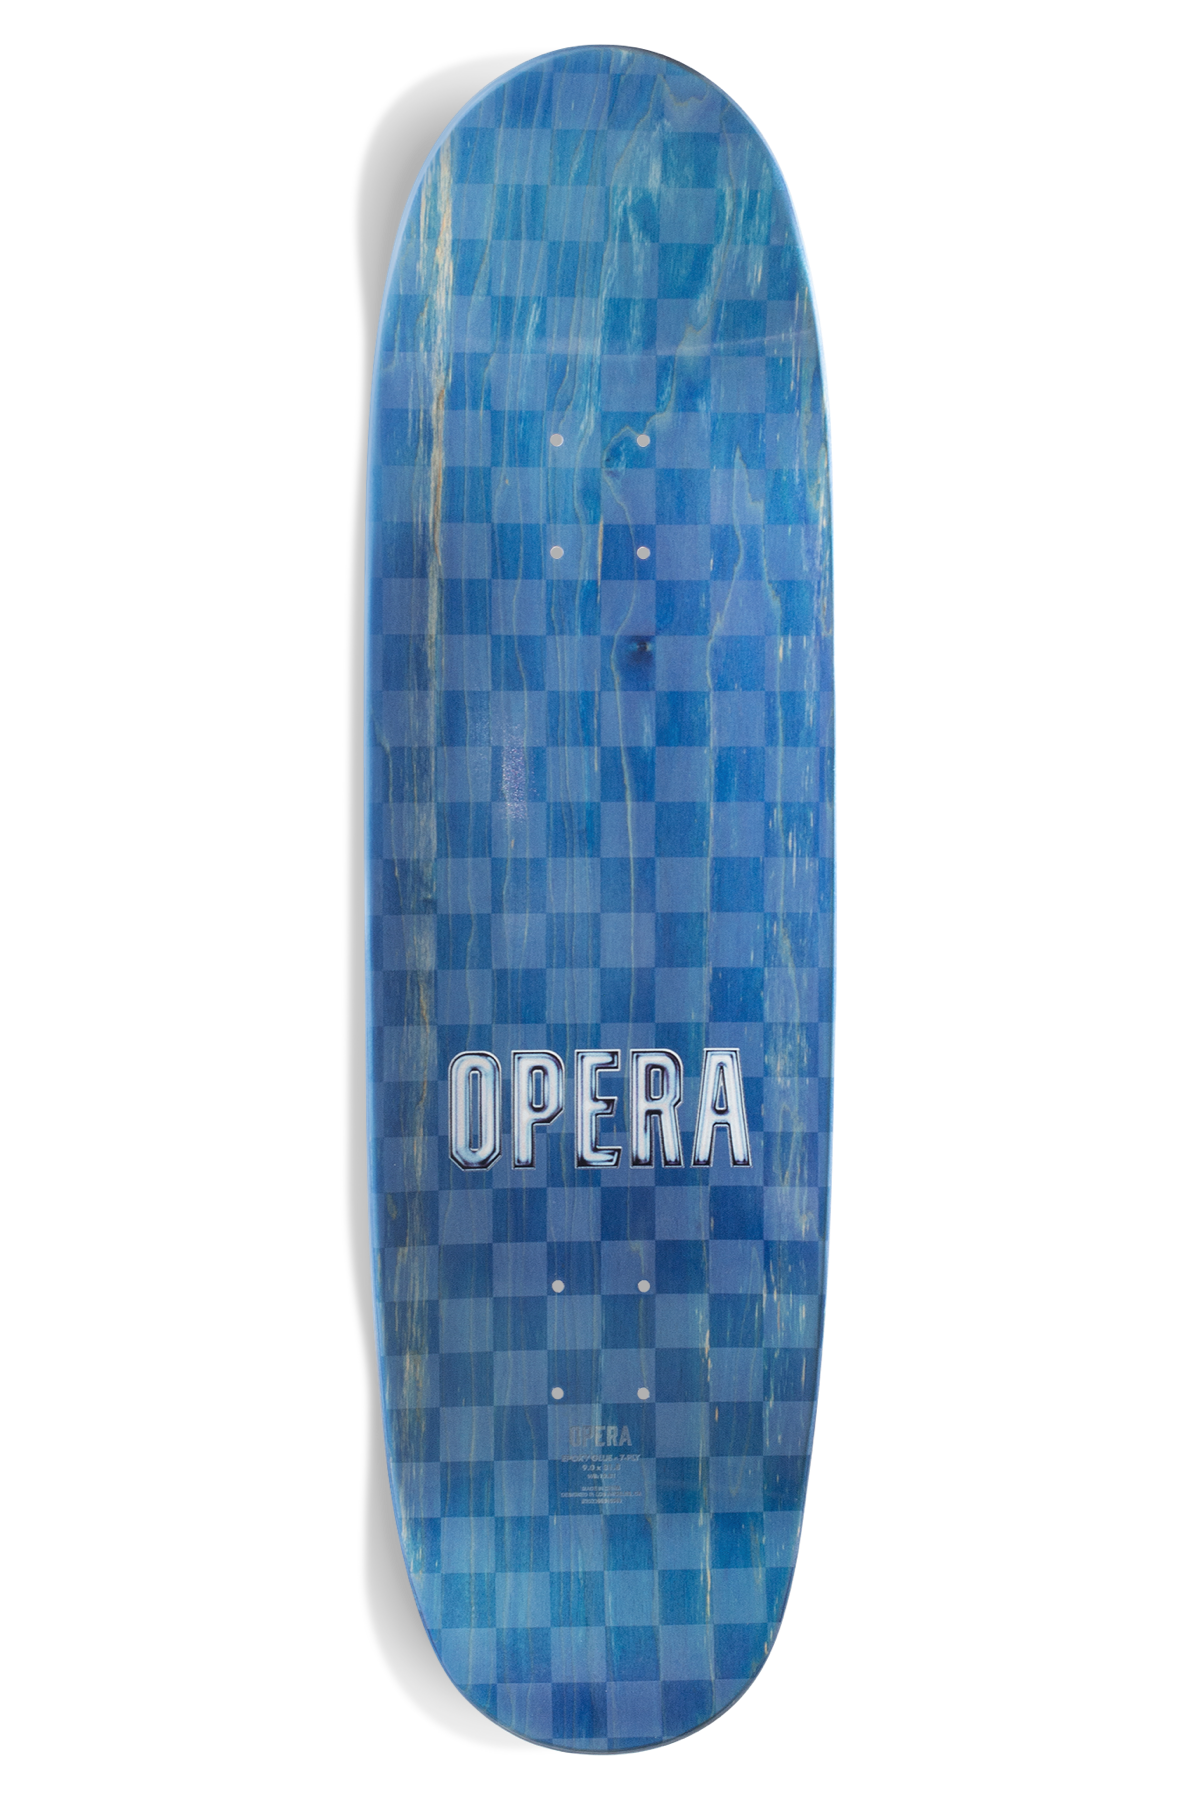 Opera Bit Ex7 Skateboard Deck - 8.9"